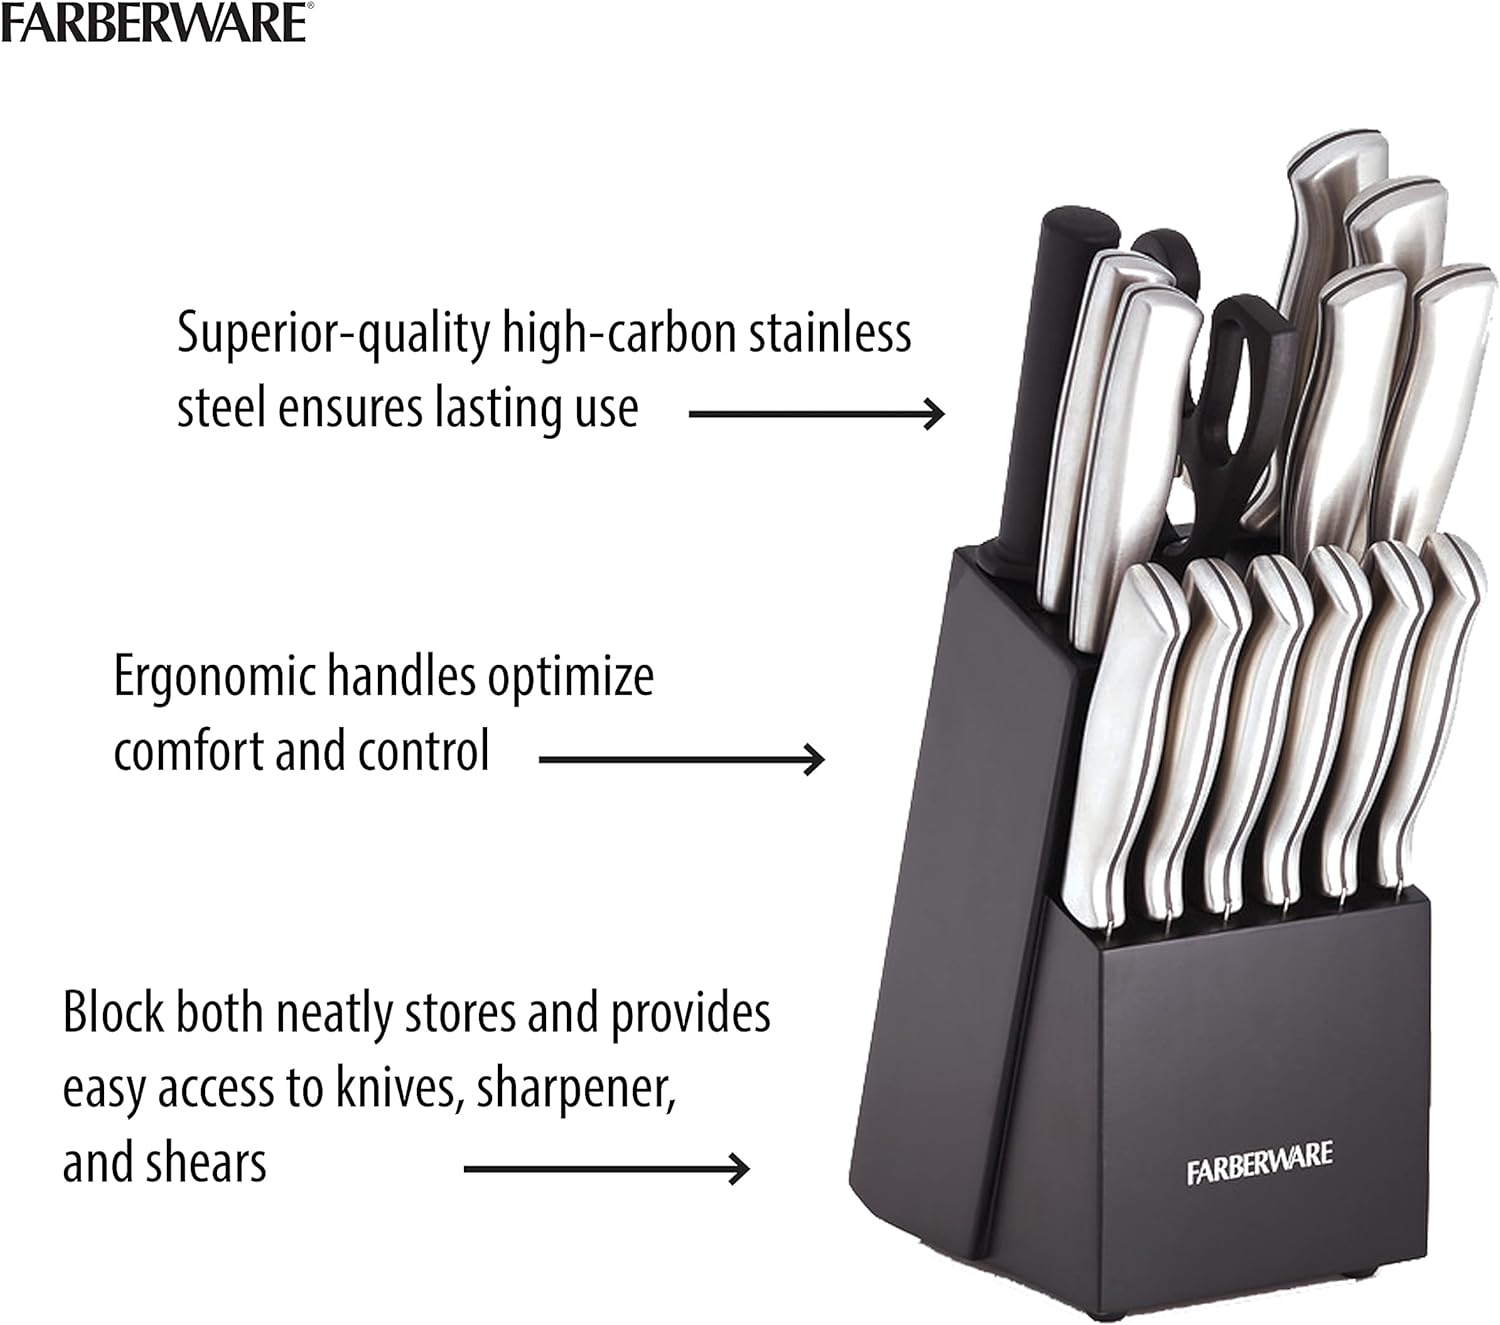 5152497 15-Piece High-Carbon Stamped Stainless Steel Kitchen Knife Set with Wood Block, Steak Knives, Razor-Sharp, Black